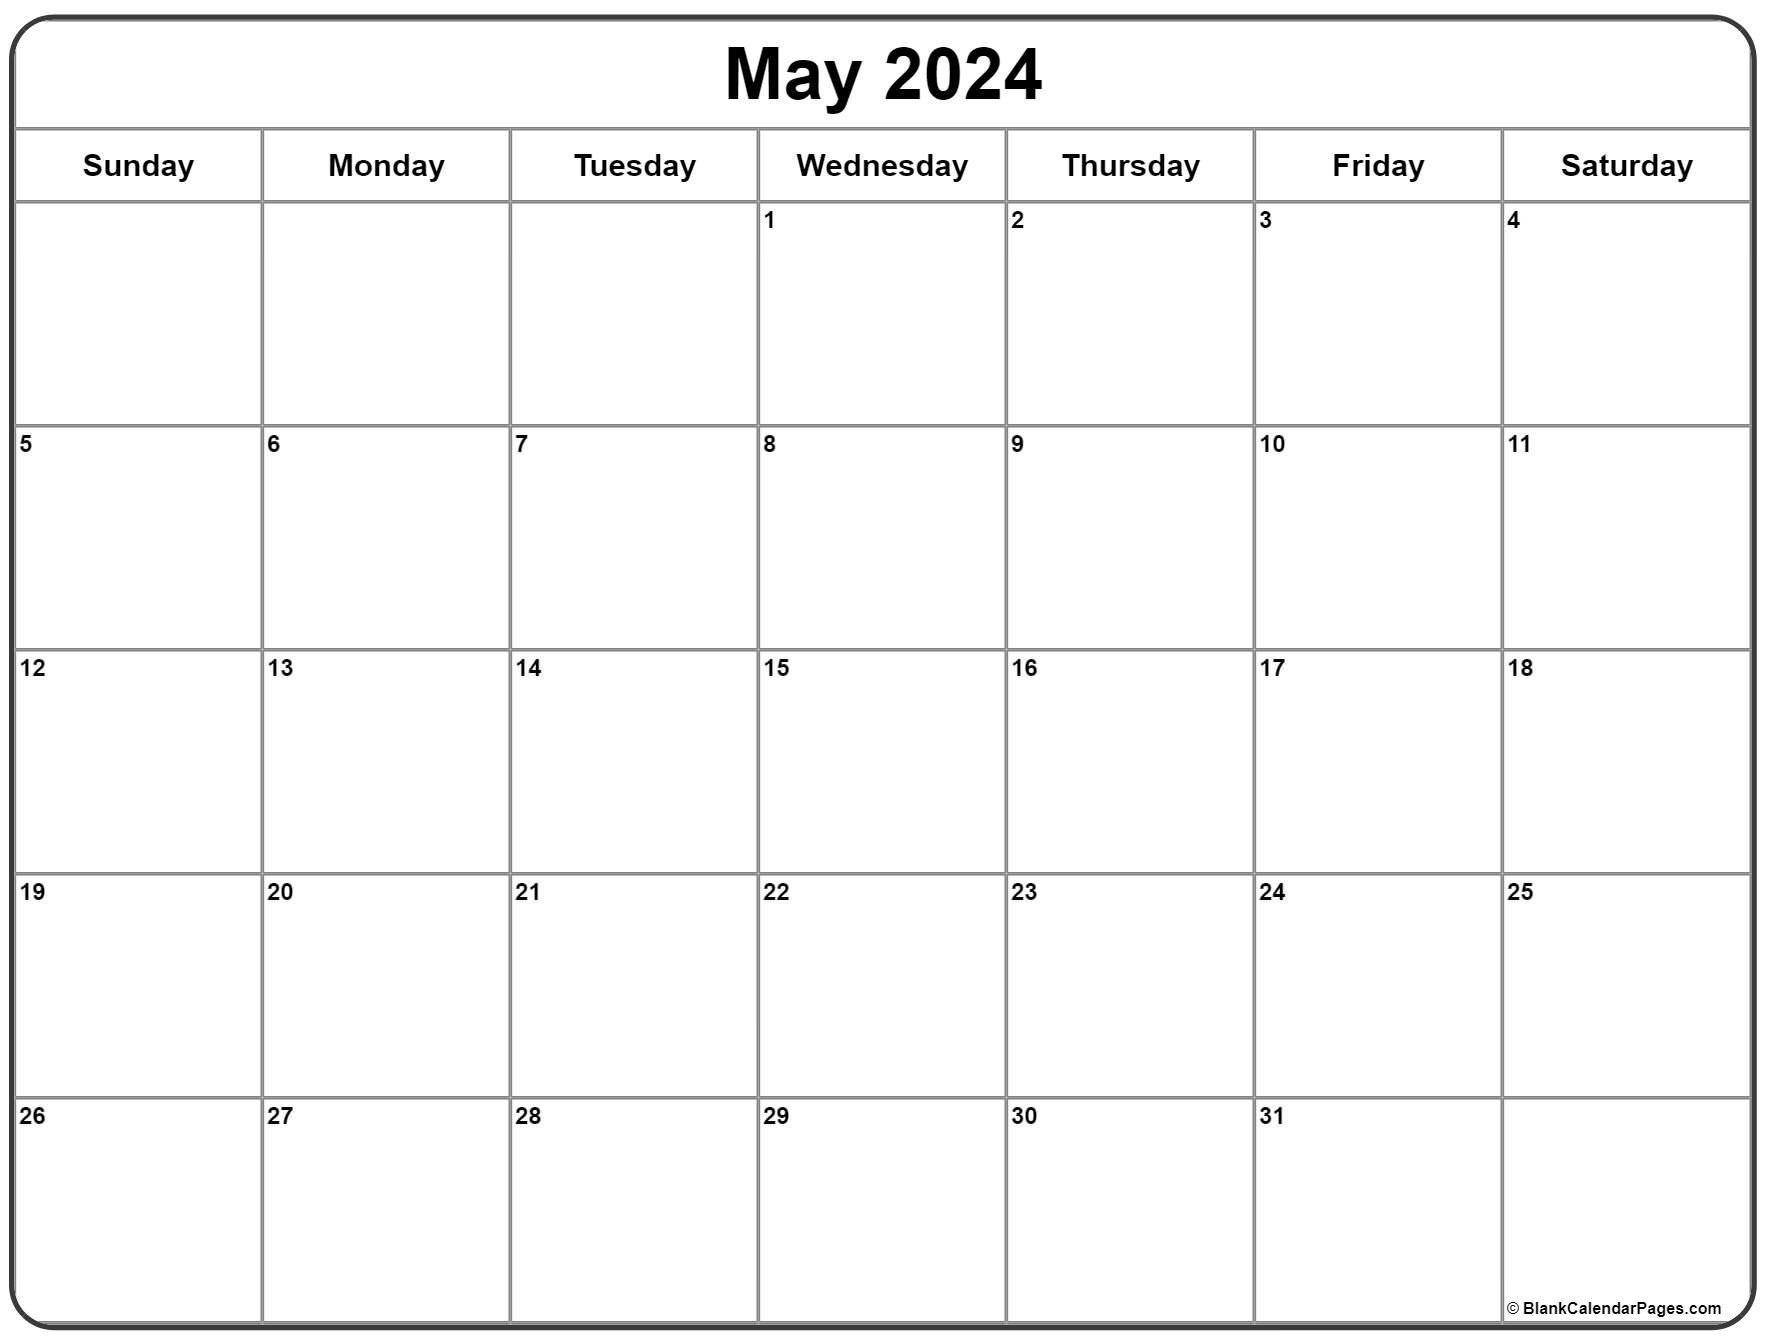 May 2024 Calendar Printable Cool Ultimate Awasome List of Calendar